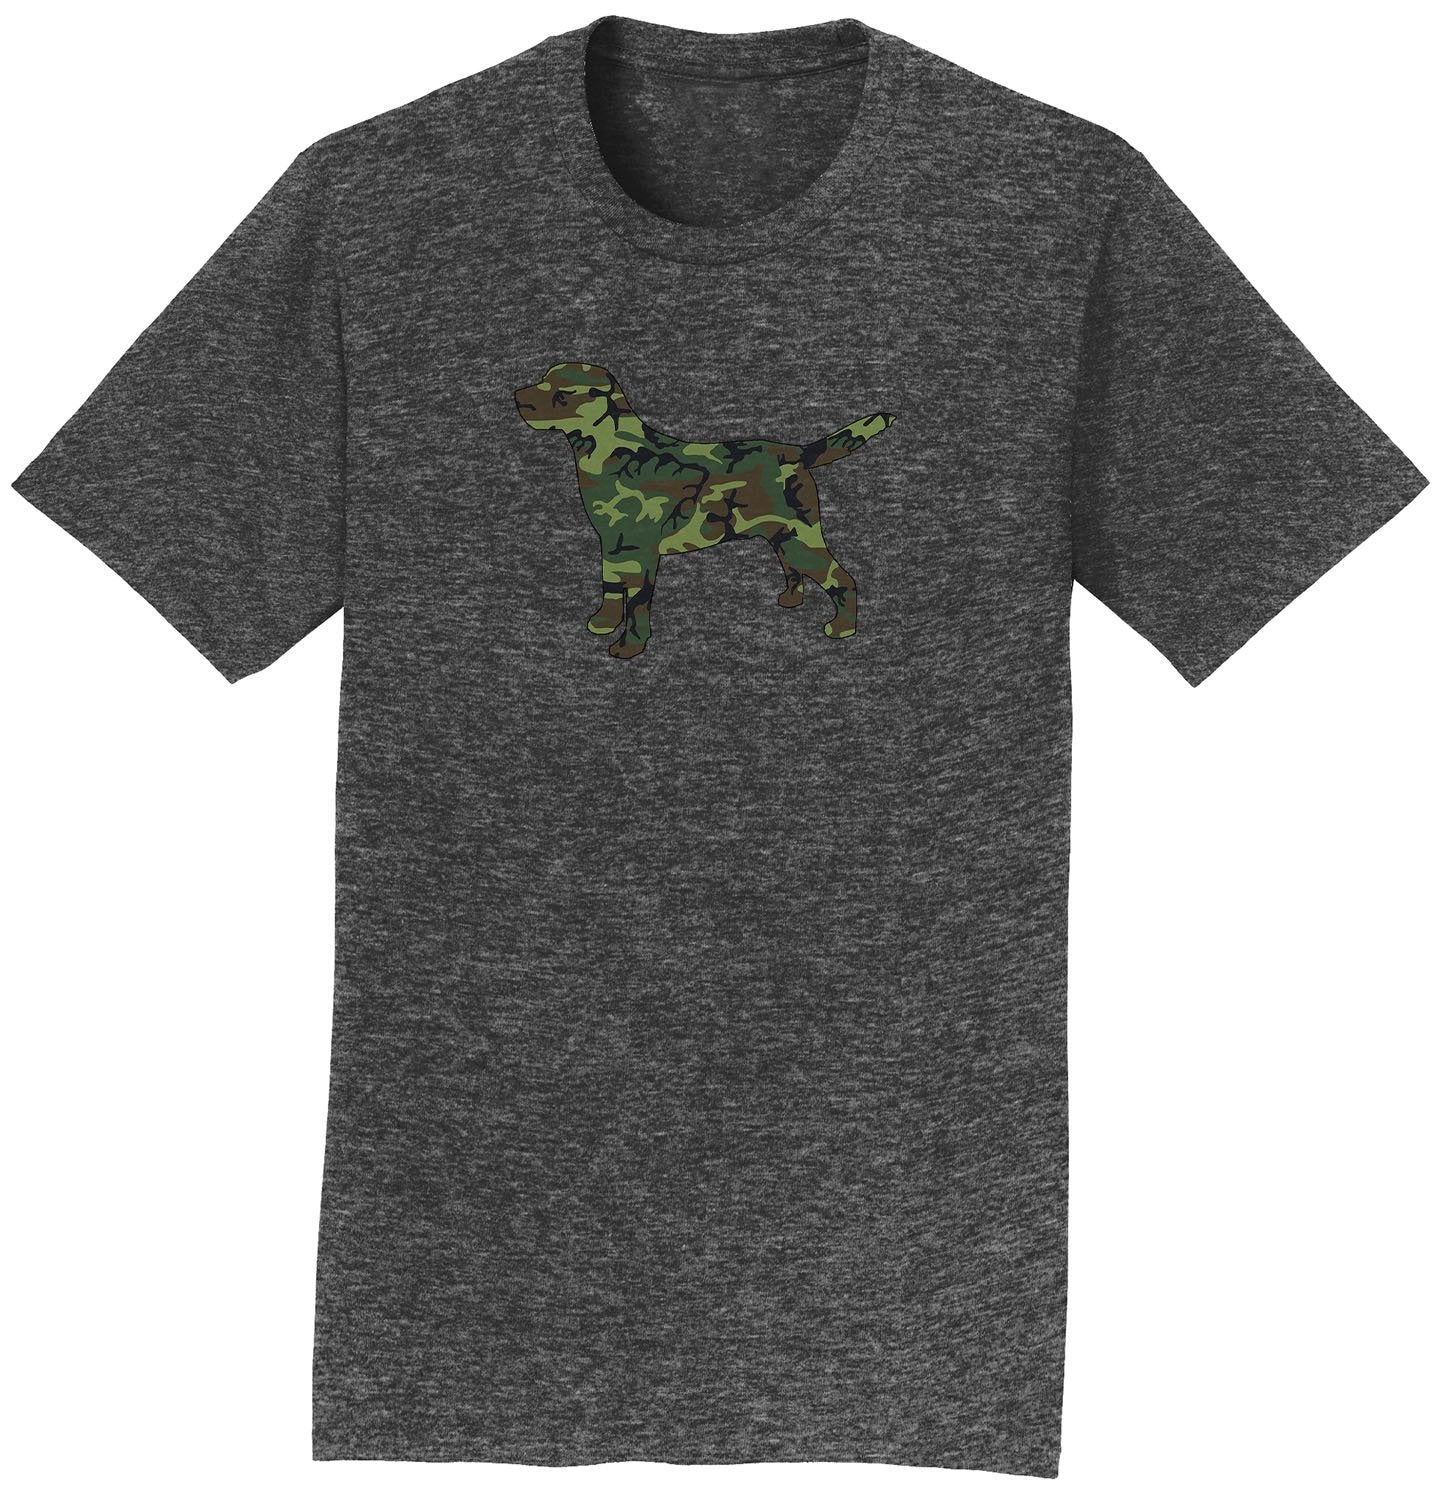 Woodland Camouflage Silhouette - Adult Unisex T-Shirt